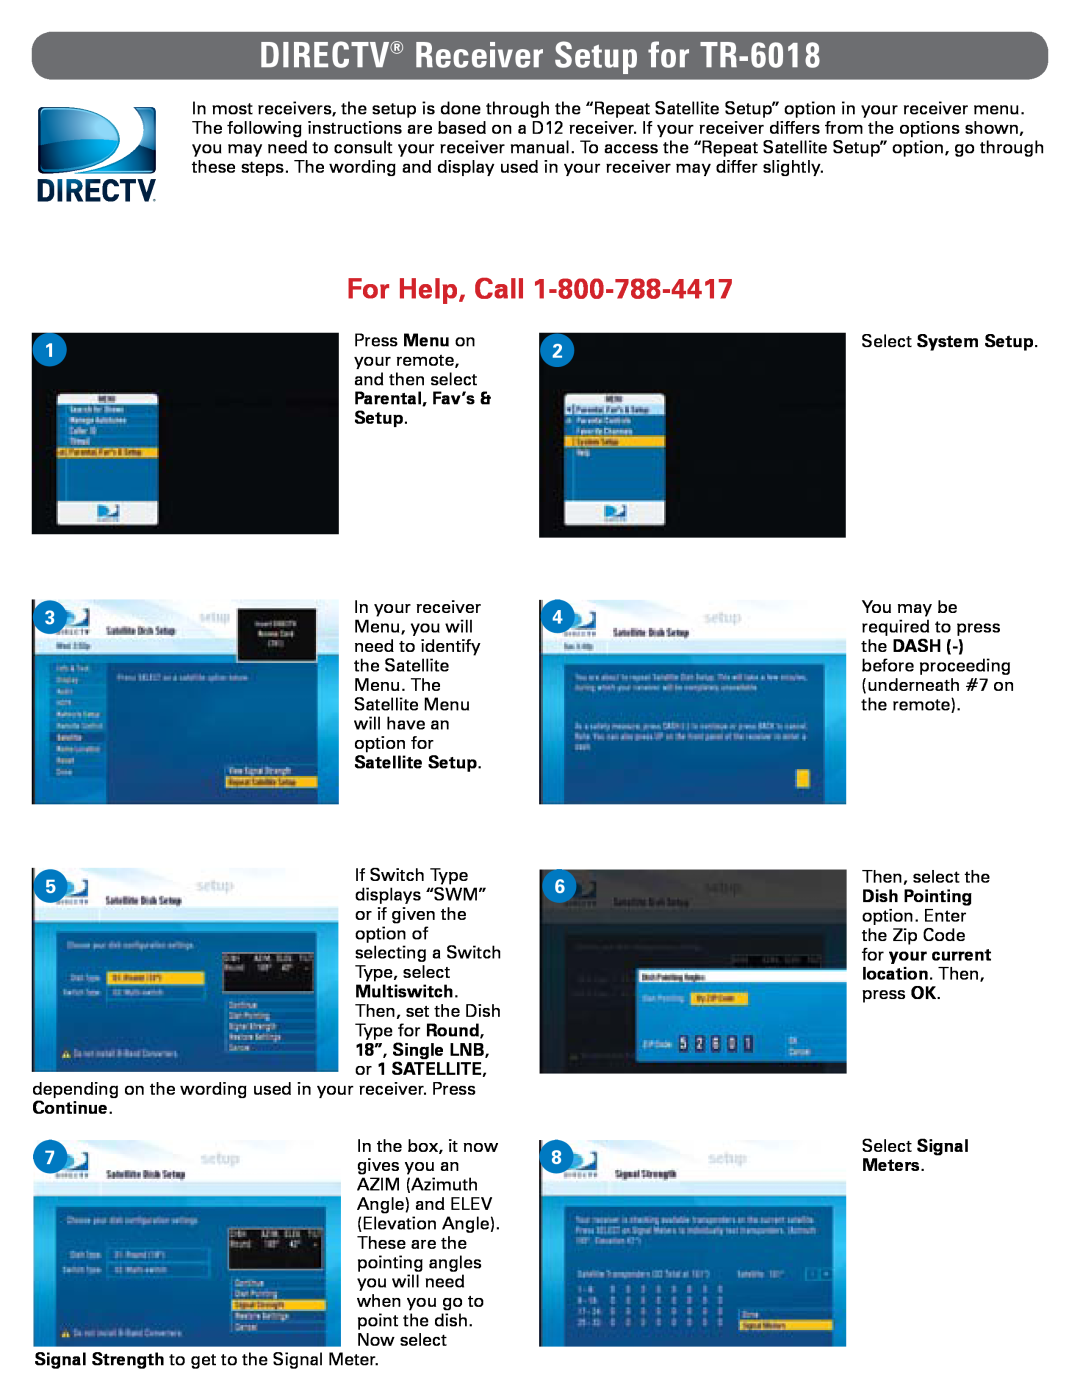 DirecTV TR-6018 manual Parental, Fav’s Setup, Multiswitch, 18”, Single LNB, or 1 SATELLITE, Continue, Select System Setup 